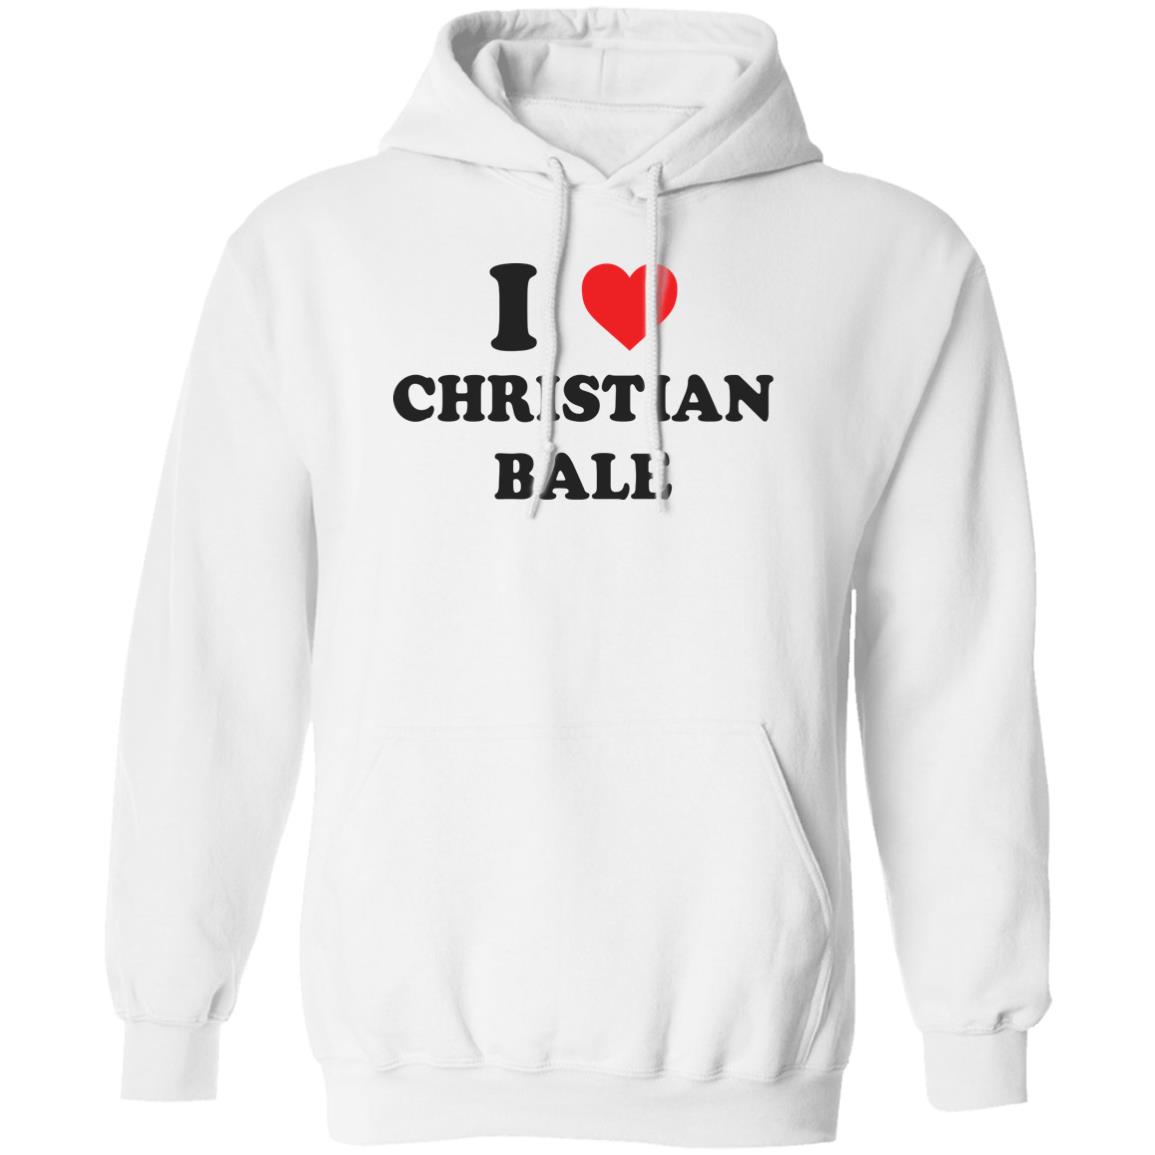 I Love Christian Bale Shirt 2